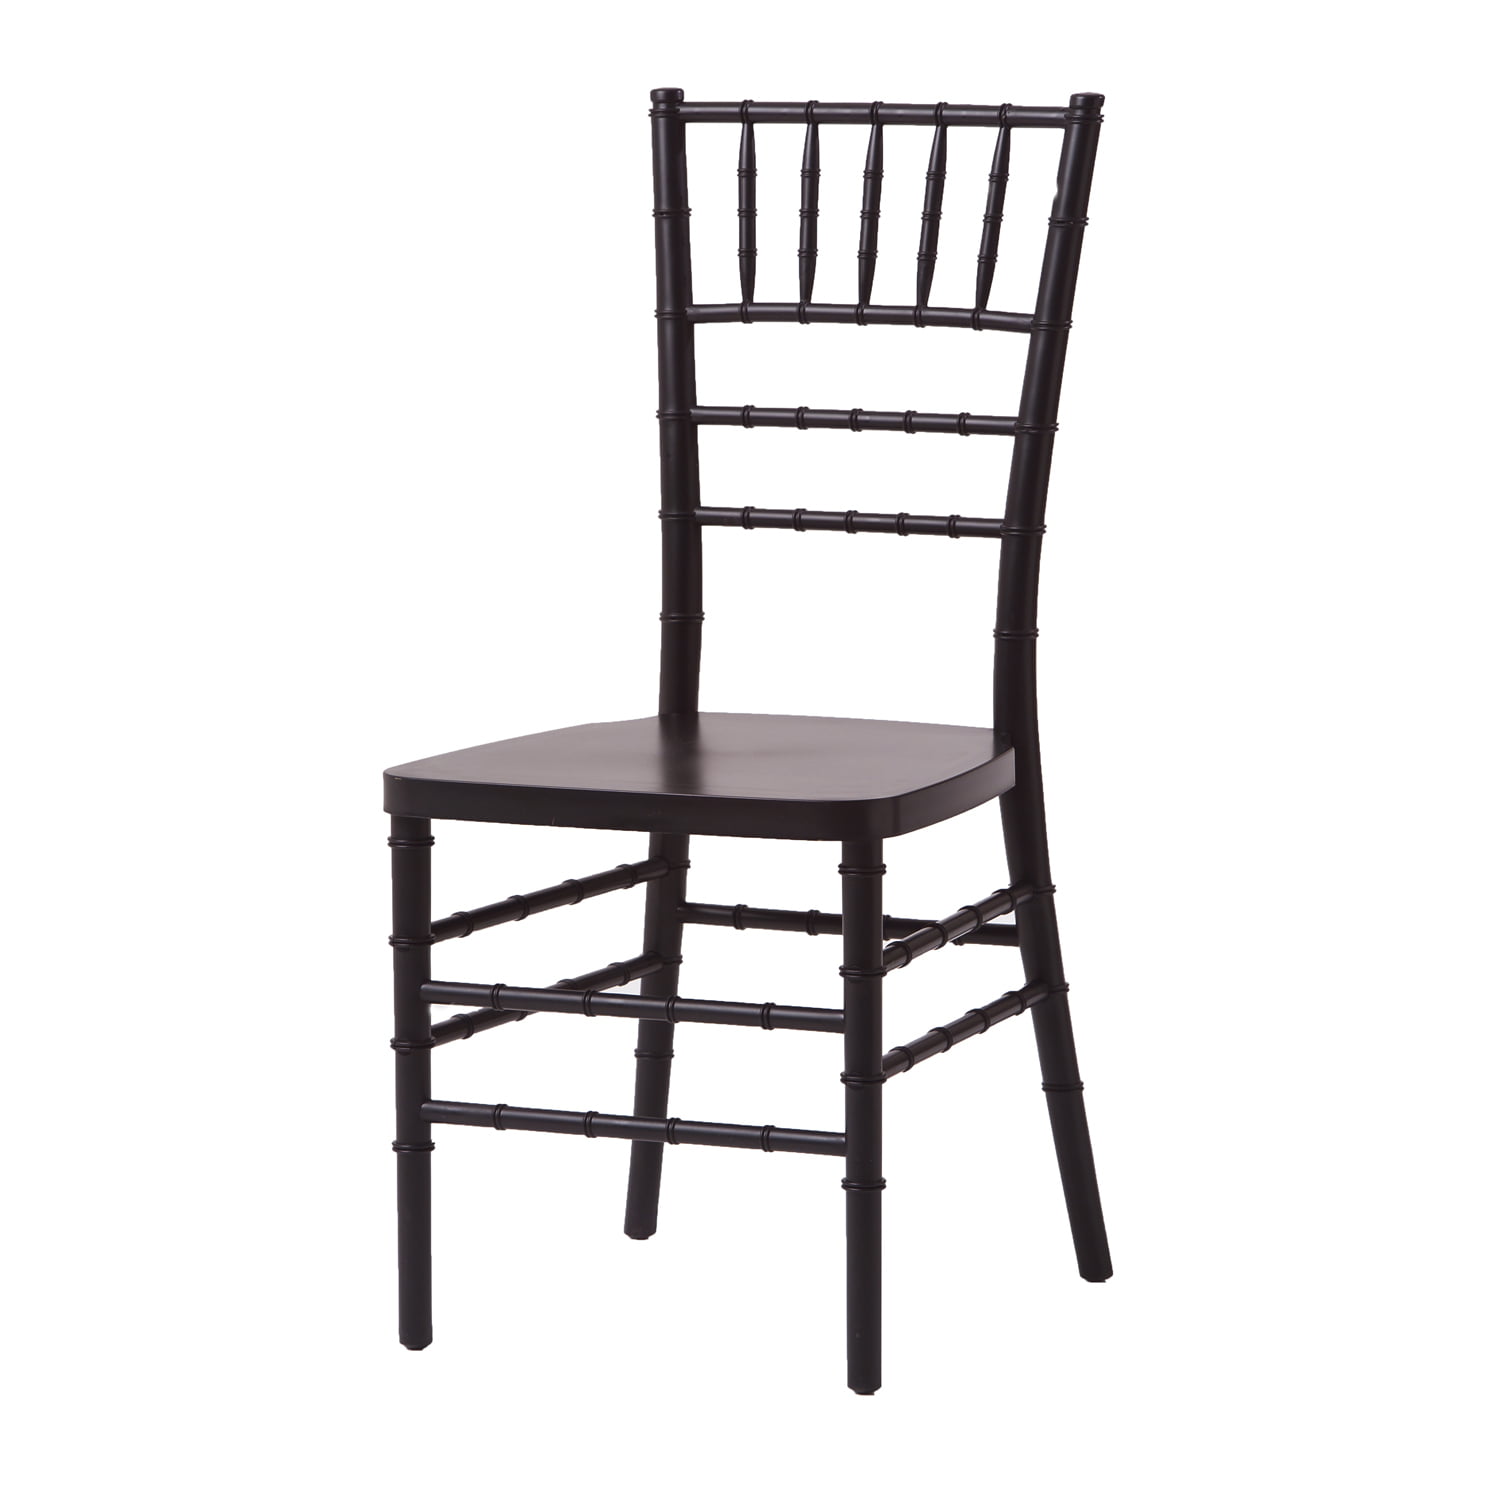 Rb-700k-bk-web2 Max Resin Black Crystal Chiavari Chair, Set Of 2 - 36 X 16 X 15.3 In.